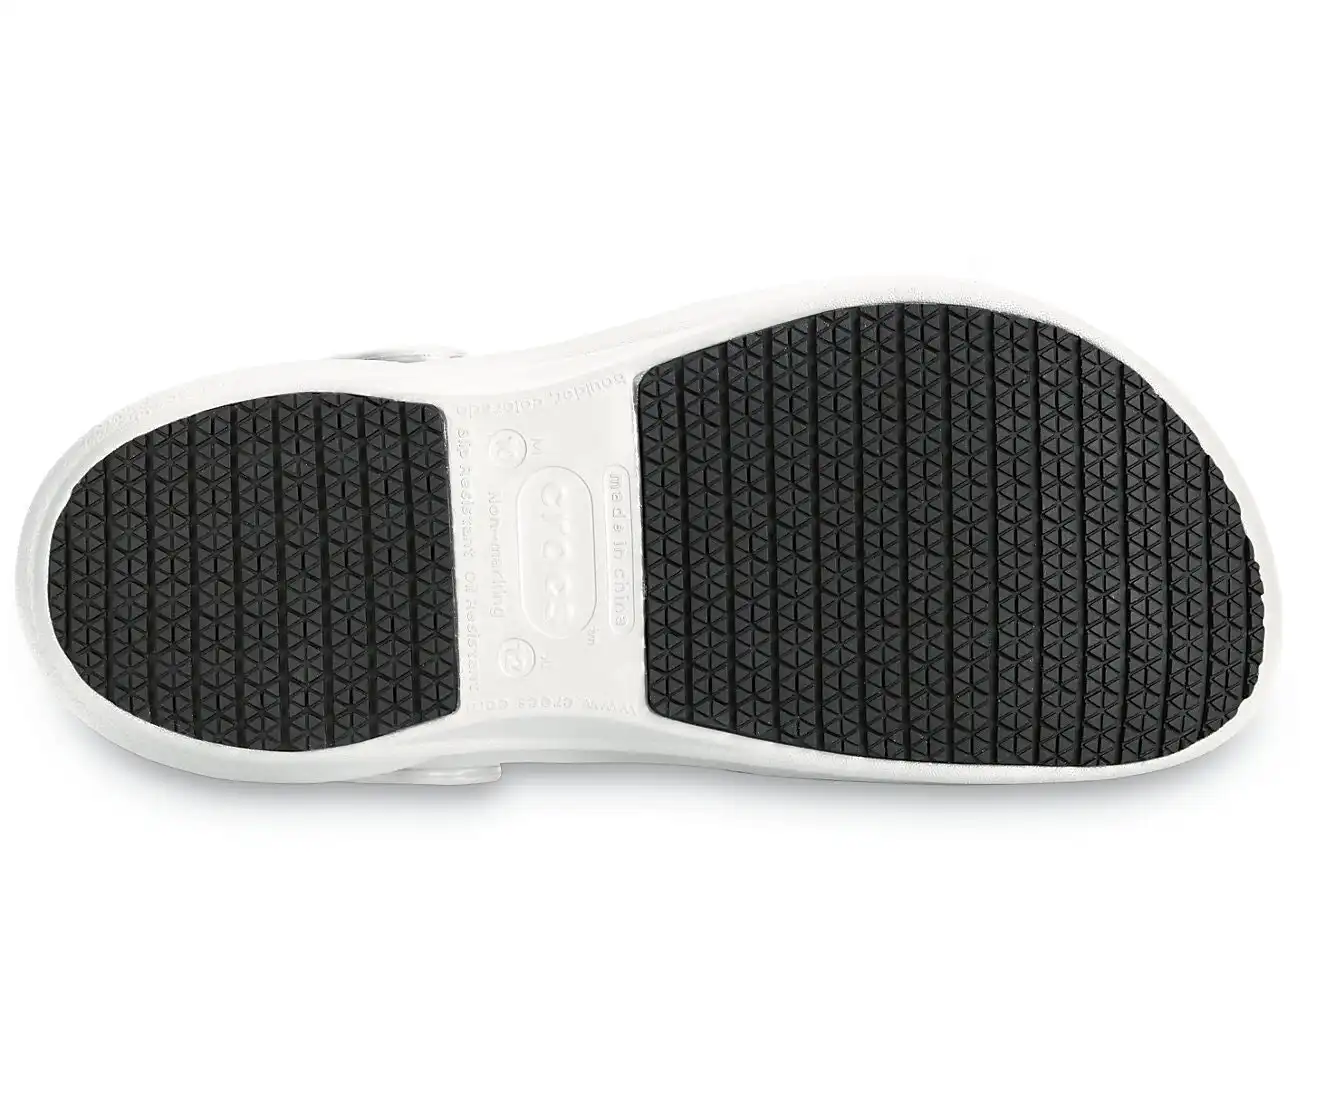 Crocs Bistro Clogs Men's Women's Slip-on Shoes Slippers Sandals (Unisex) - White